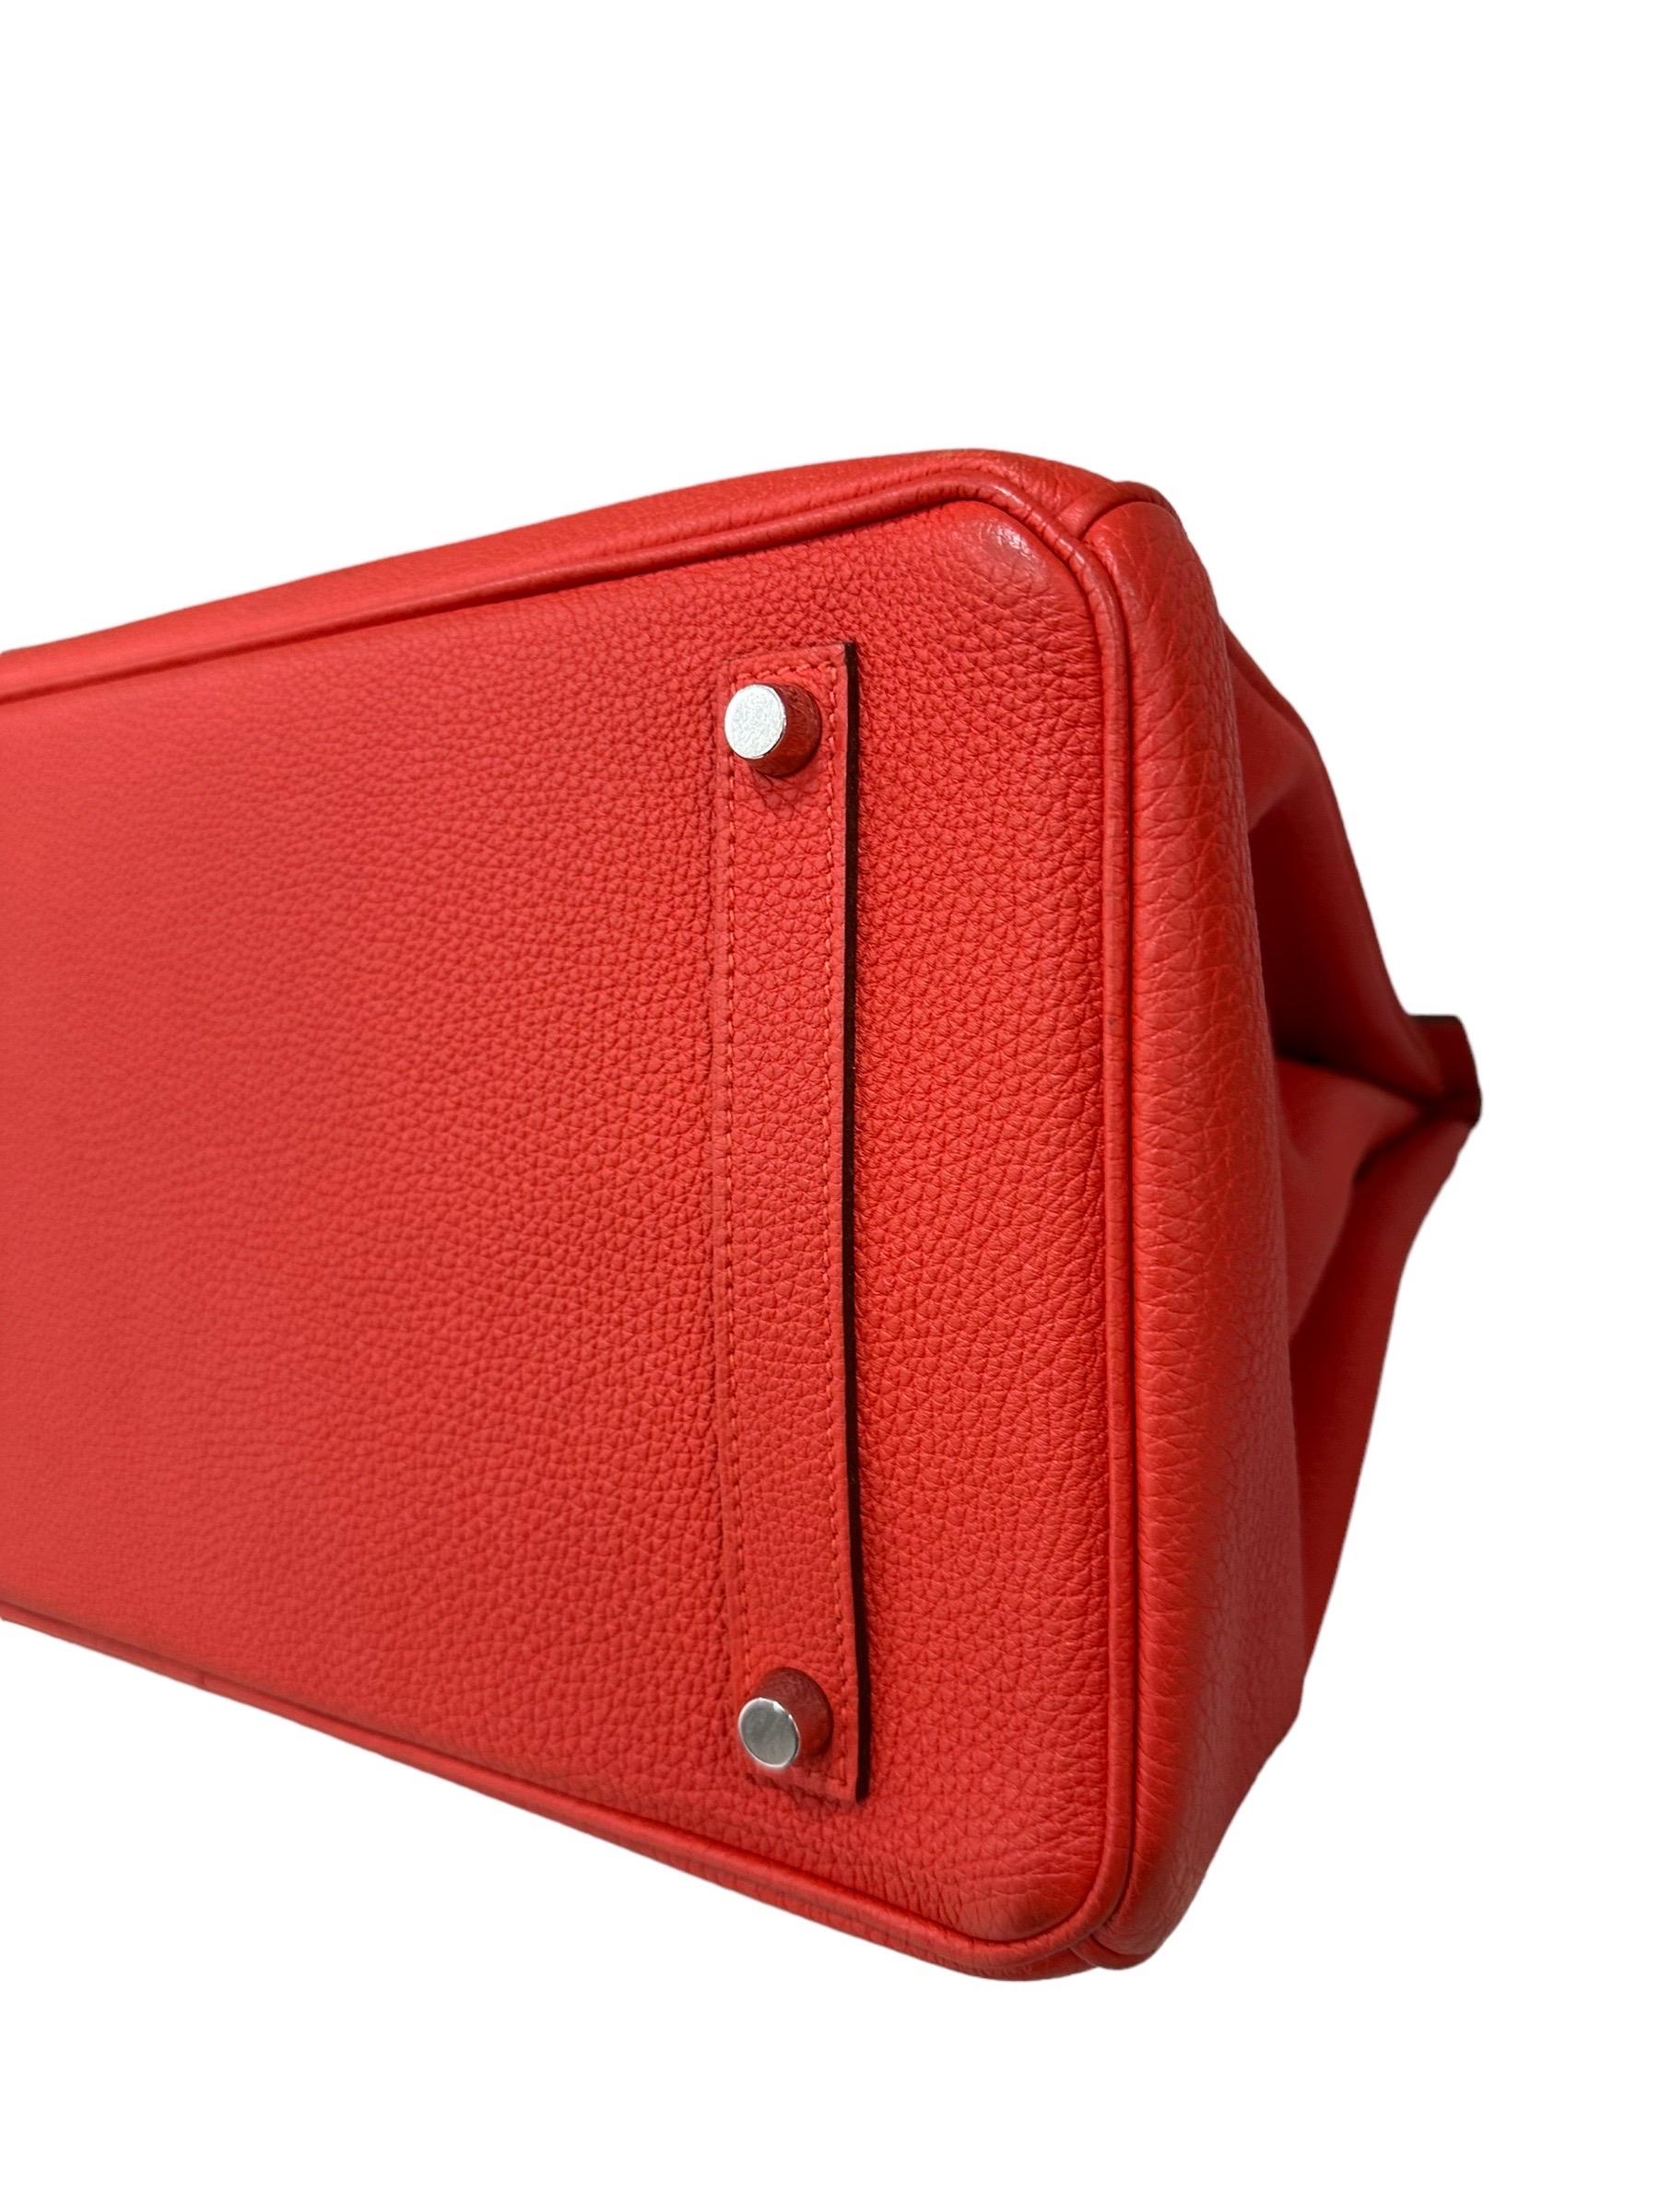 2011 Hermès Birkin 35 Togo Leather Rouge Capucine Top Handle Bag en vente 9